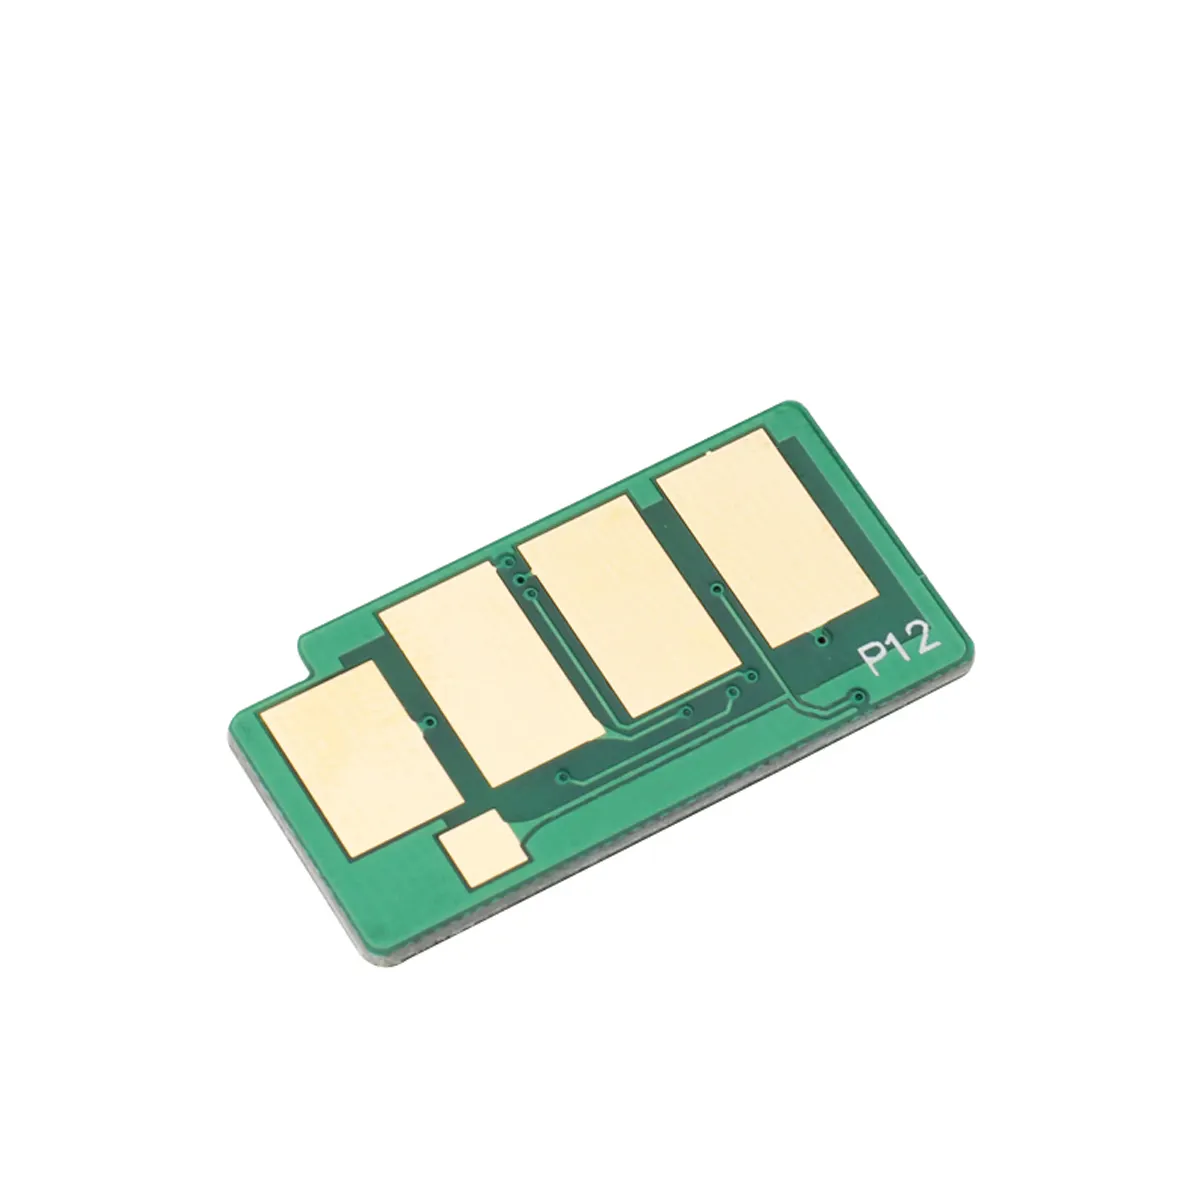 China manufacturer auto reset chip for Dell 1133 1130 1135 laser printer cartridge toner chips